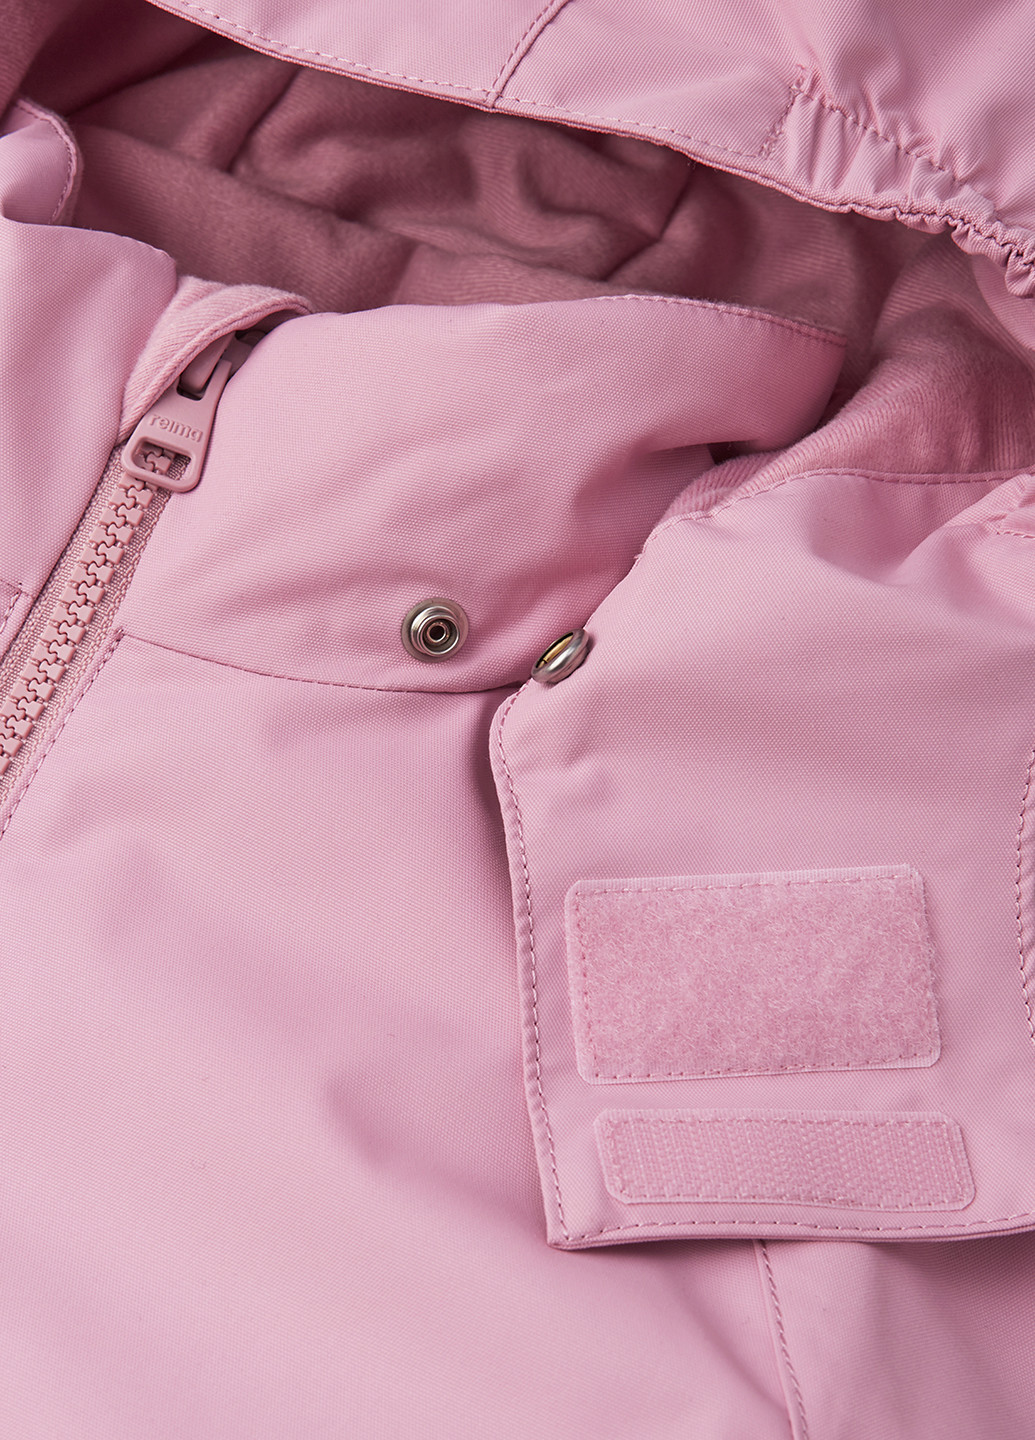 Розовая зимняя куртка зимняя Reima Reili